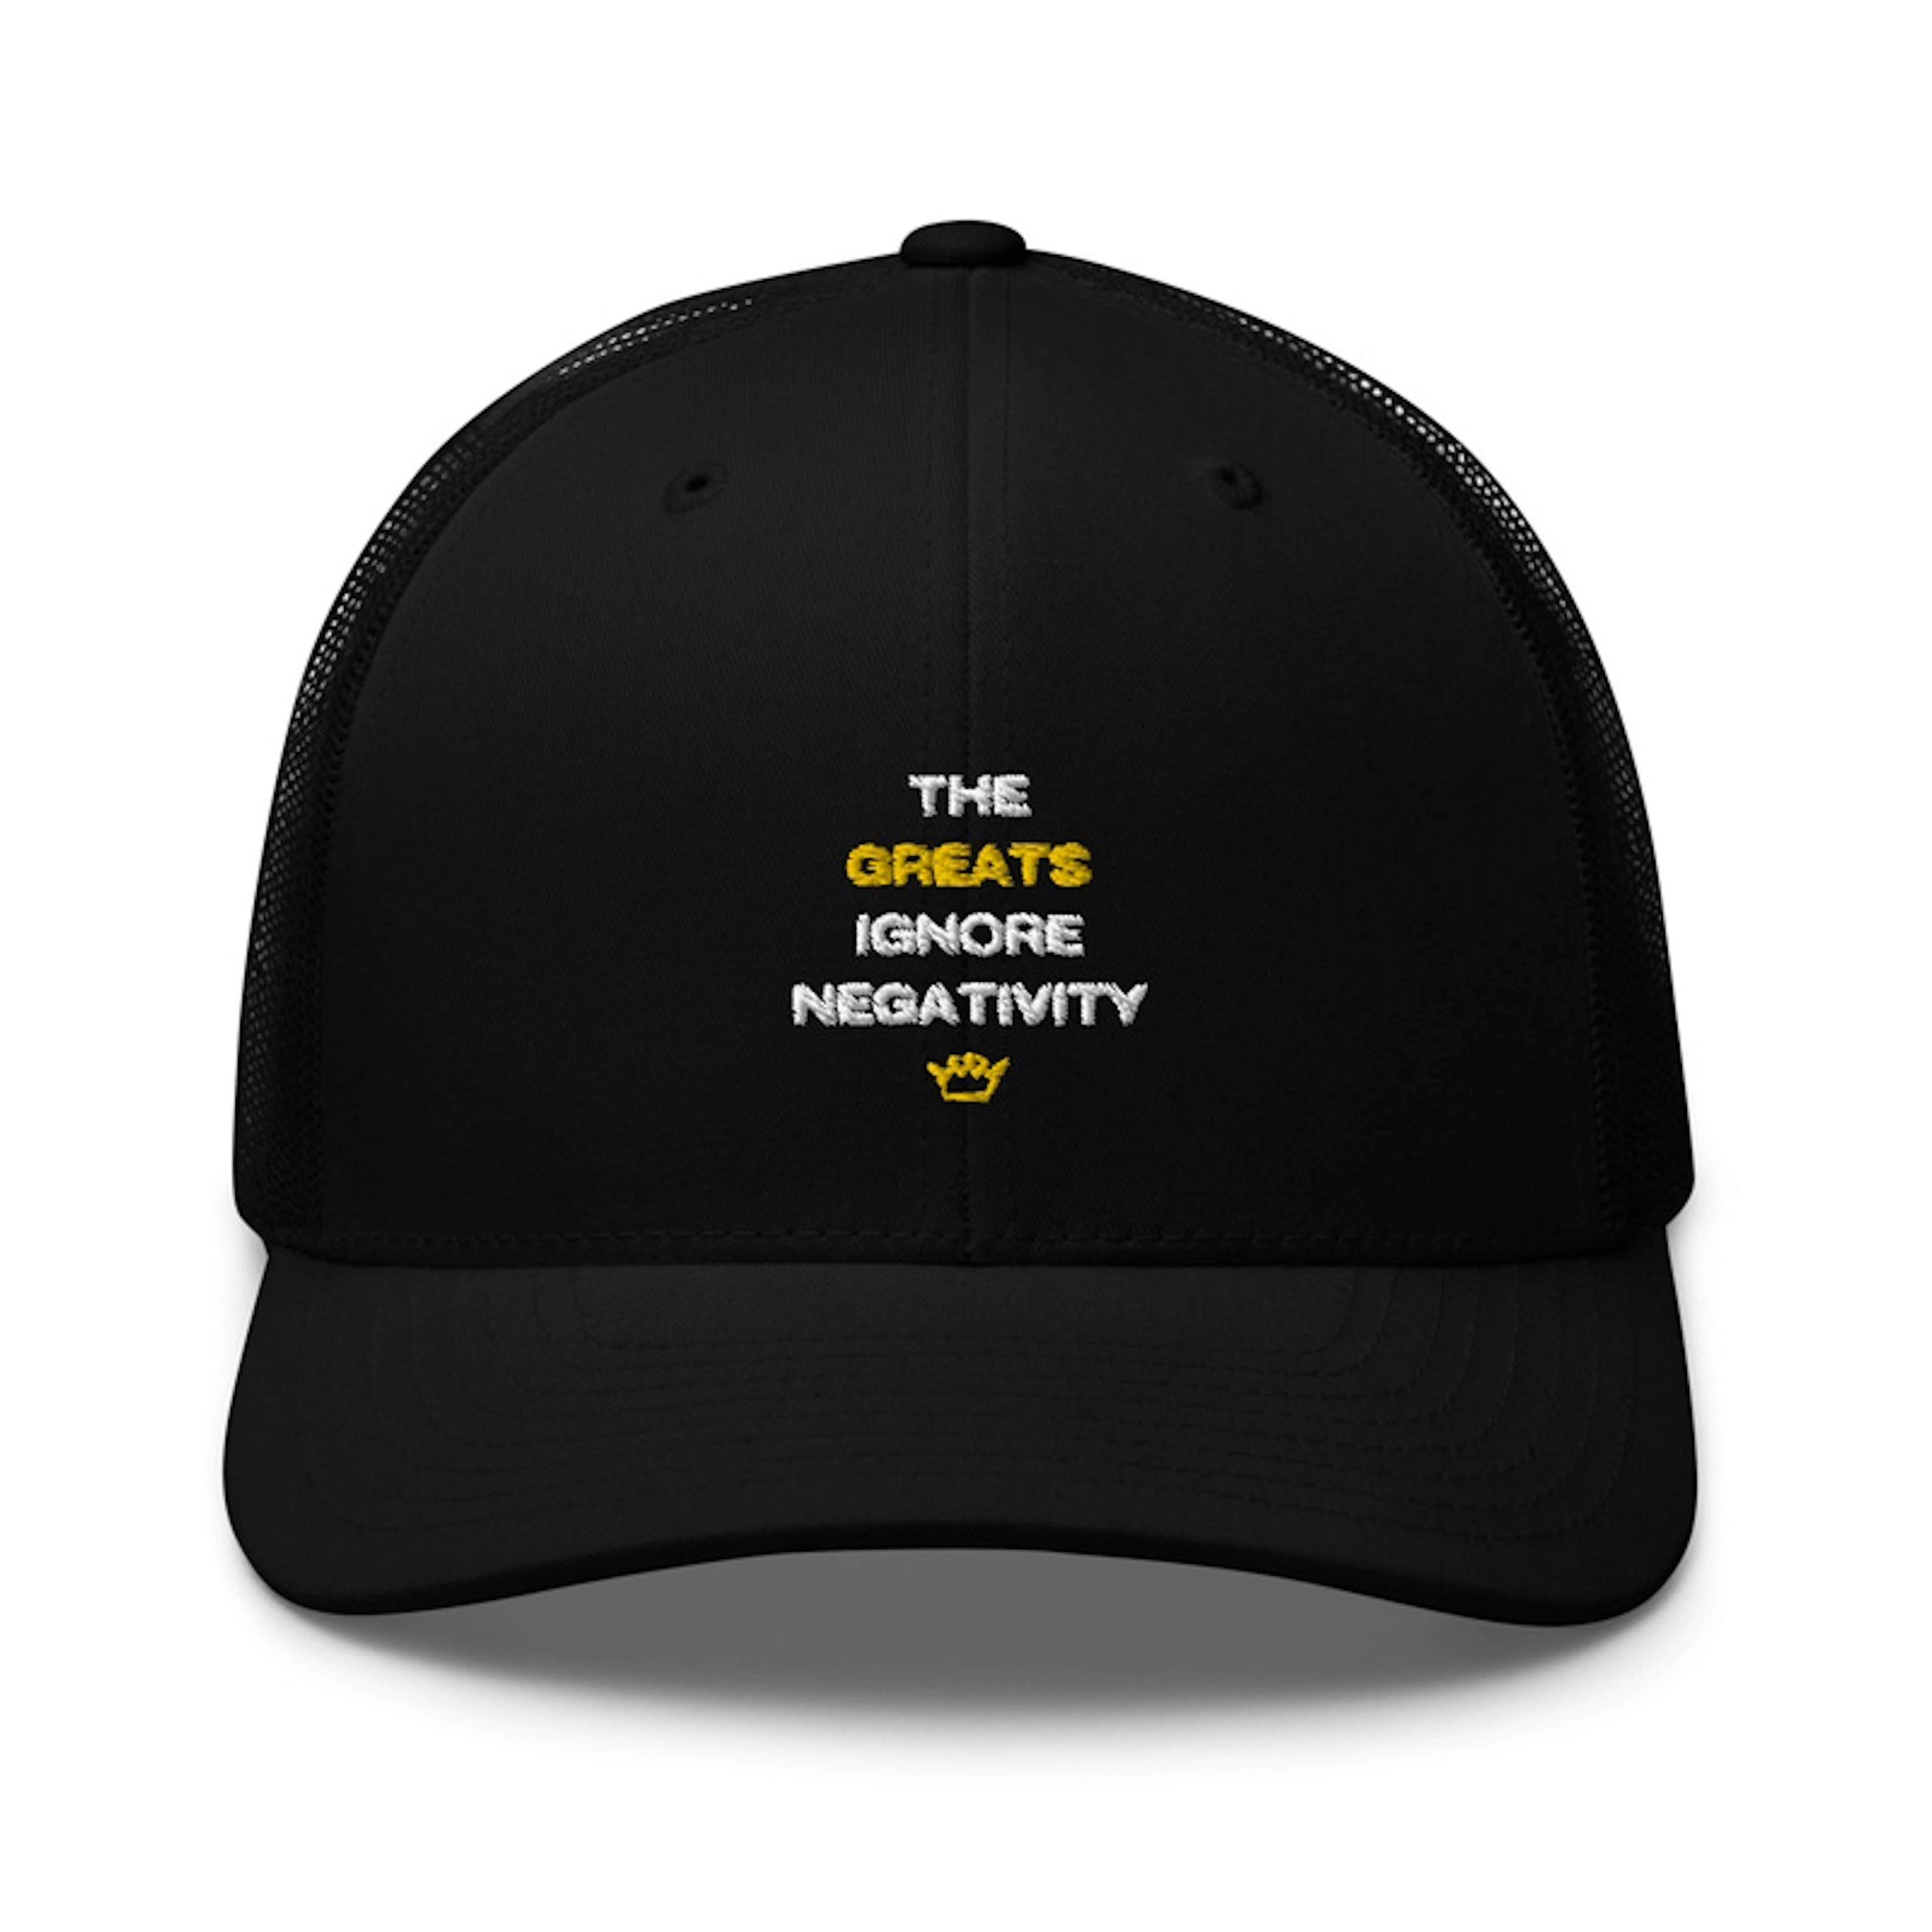 The Greats Ignore Negativity Trucker Hat